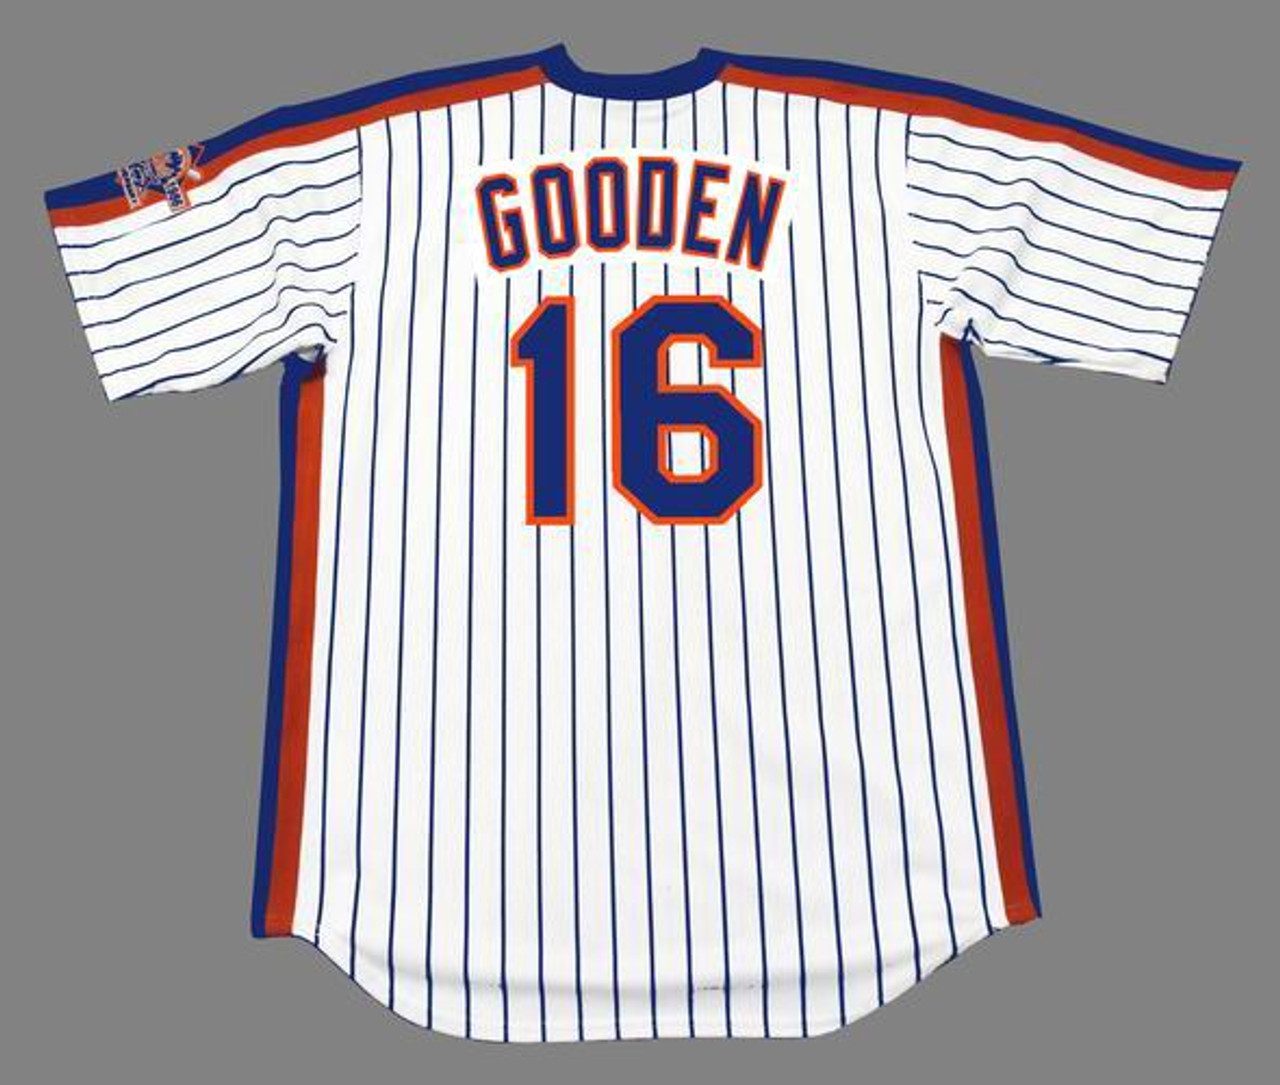 Dwight Gooden 1998 Cleveland Indians Alternate Throwback MLB Baseball Jersey